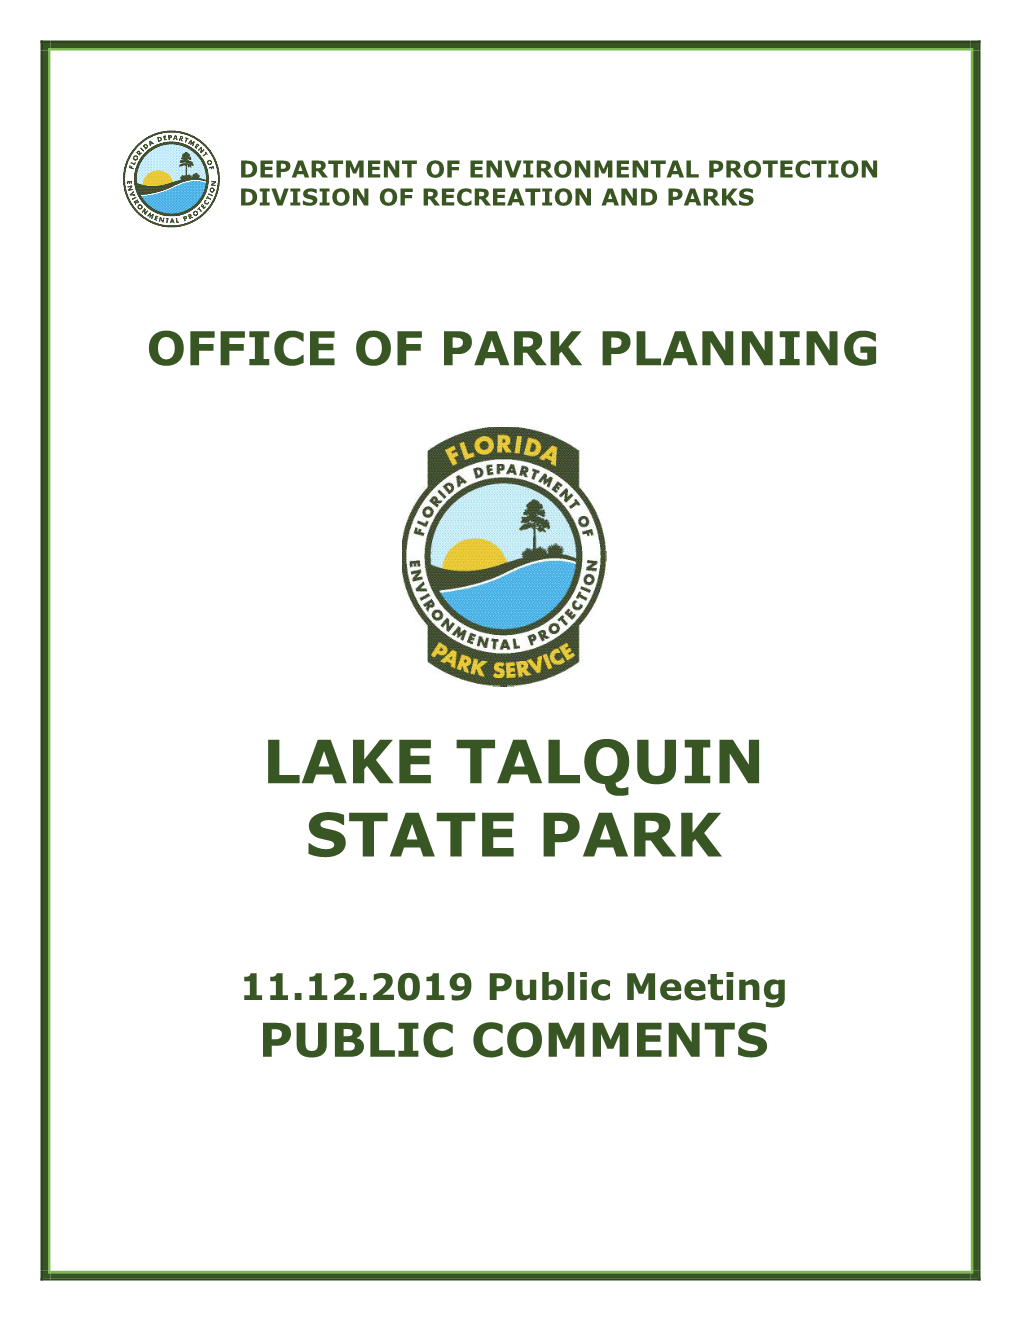 Lake Talquin State Park